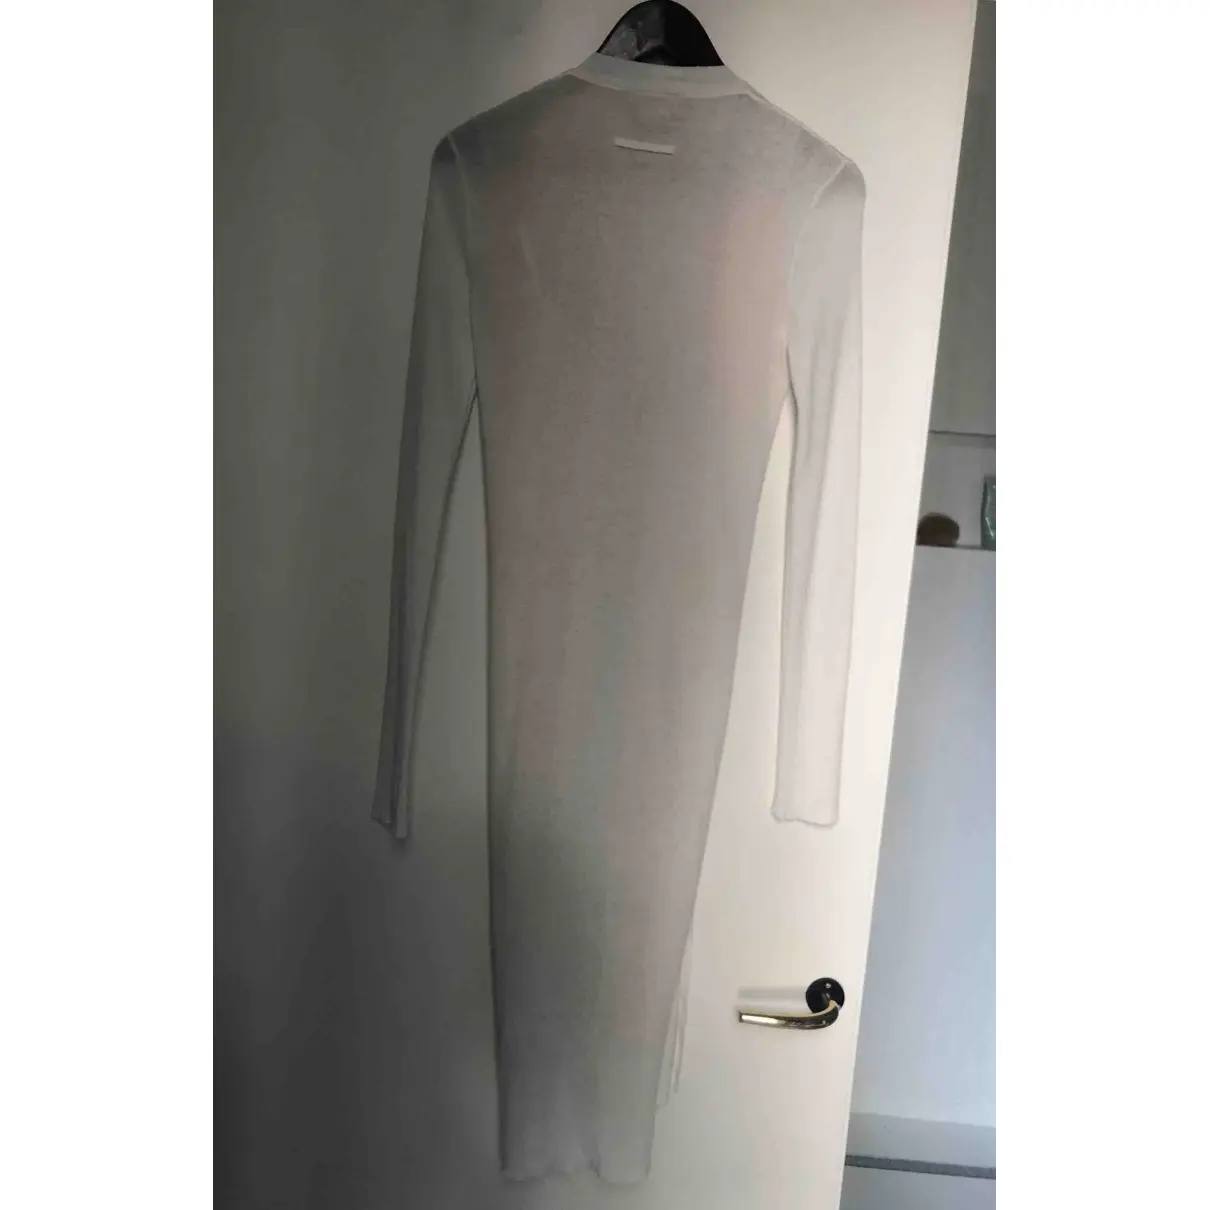 Jean Paul Gaultier Cardi coat for sale - Vintage